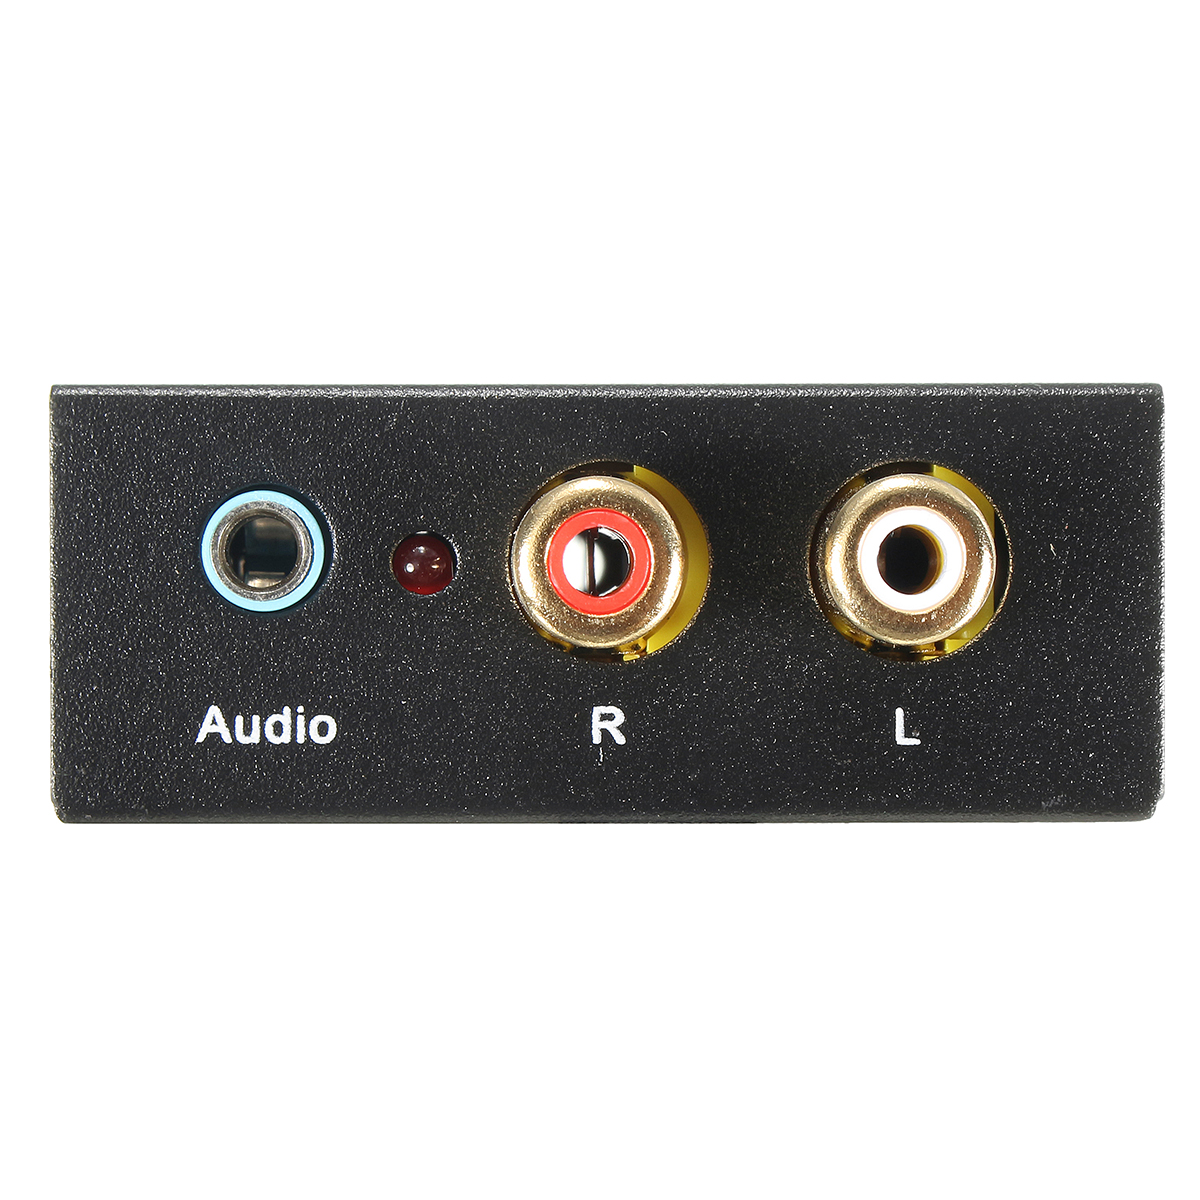 Spdif 3.5. Аудио s/PDIF коаксиальный на телевизоре. Коаксиал аудио SPDIF. RCA (S/PDIF коаксиальный). Кабель Optical Audio out RCA 5.1.